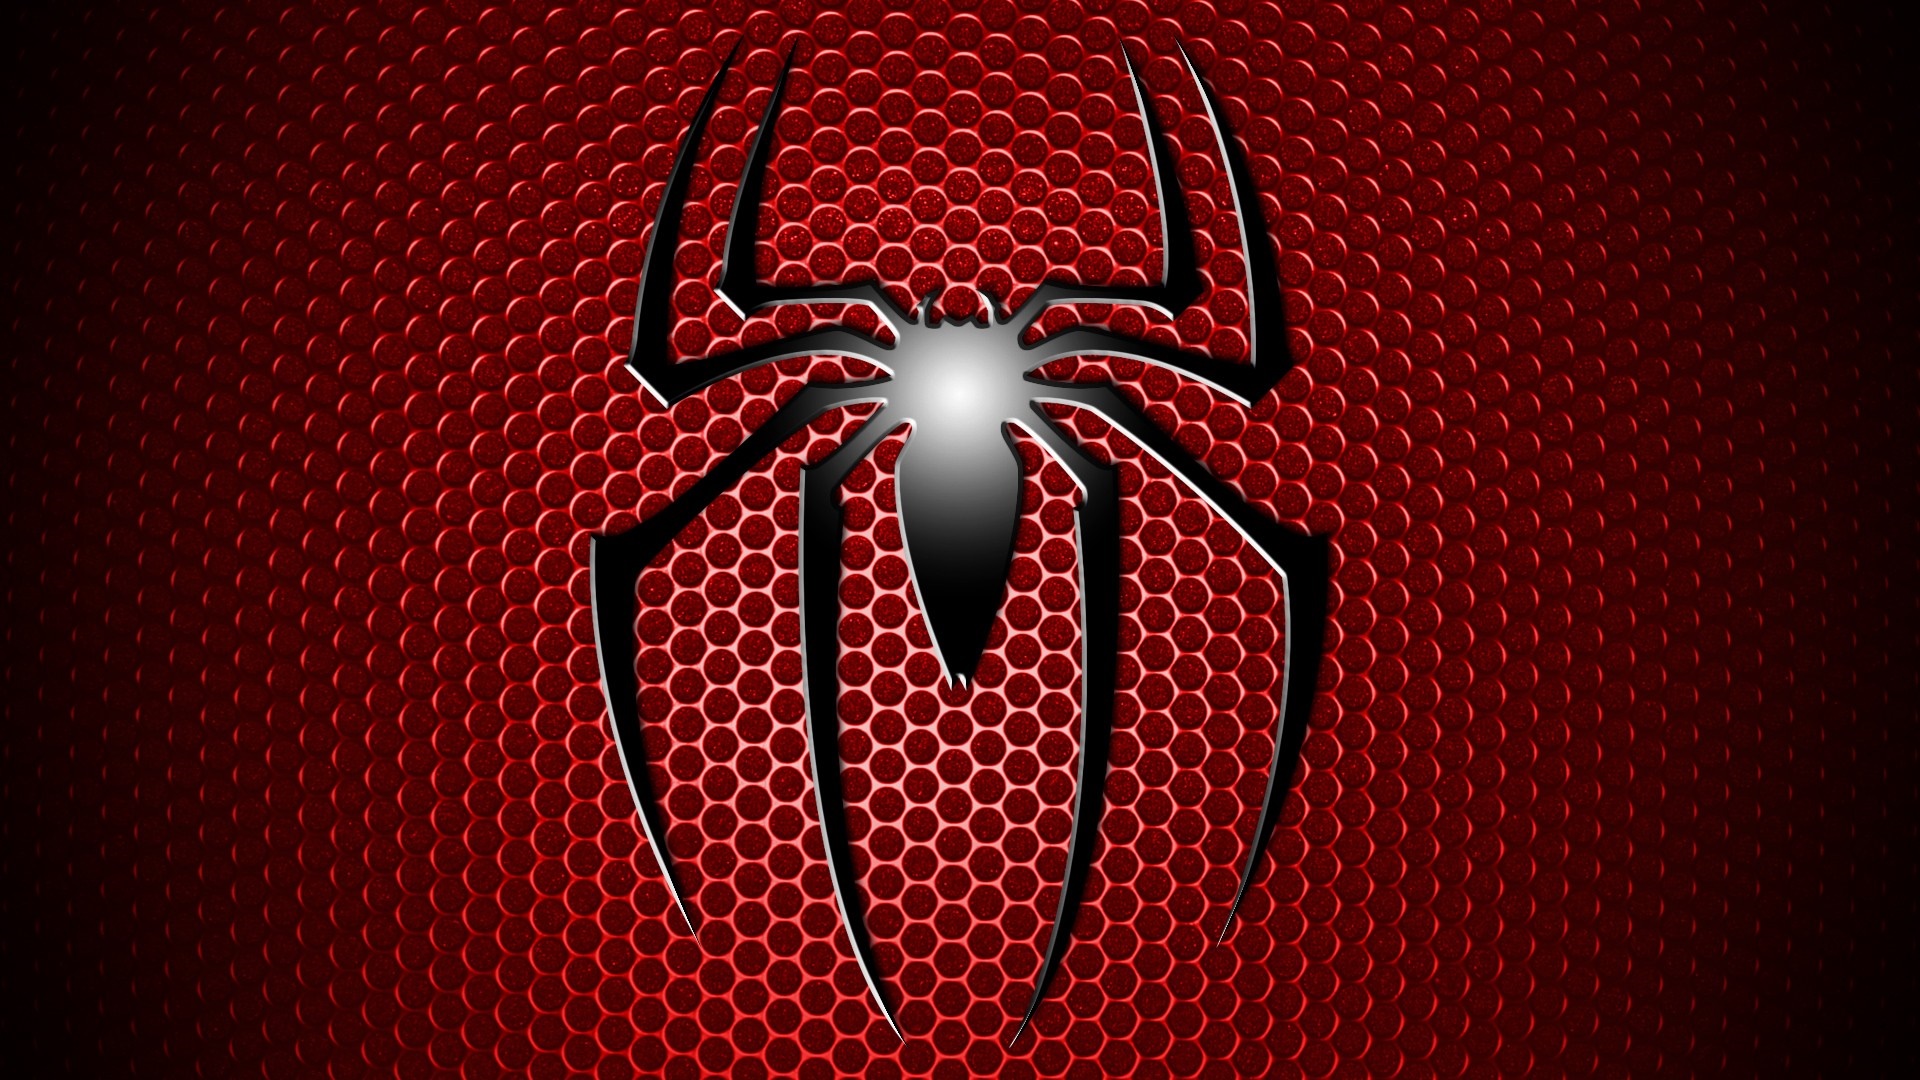 illustration, logo, red background, Marvel Comics, Spider Man, symbols, spider, computer wallpaper, font Gallery HD Wallpaper